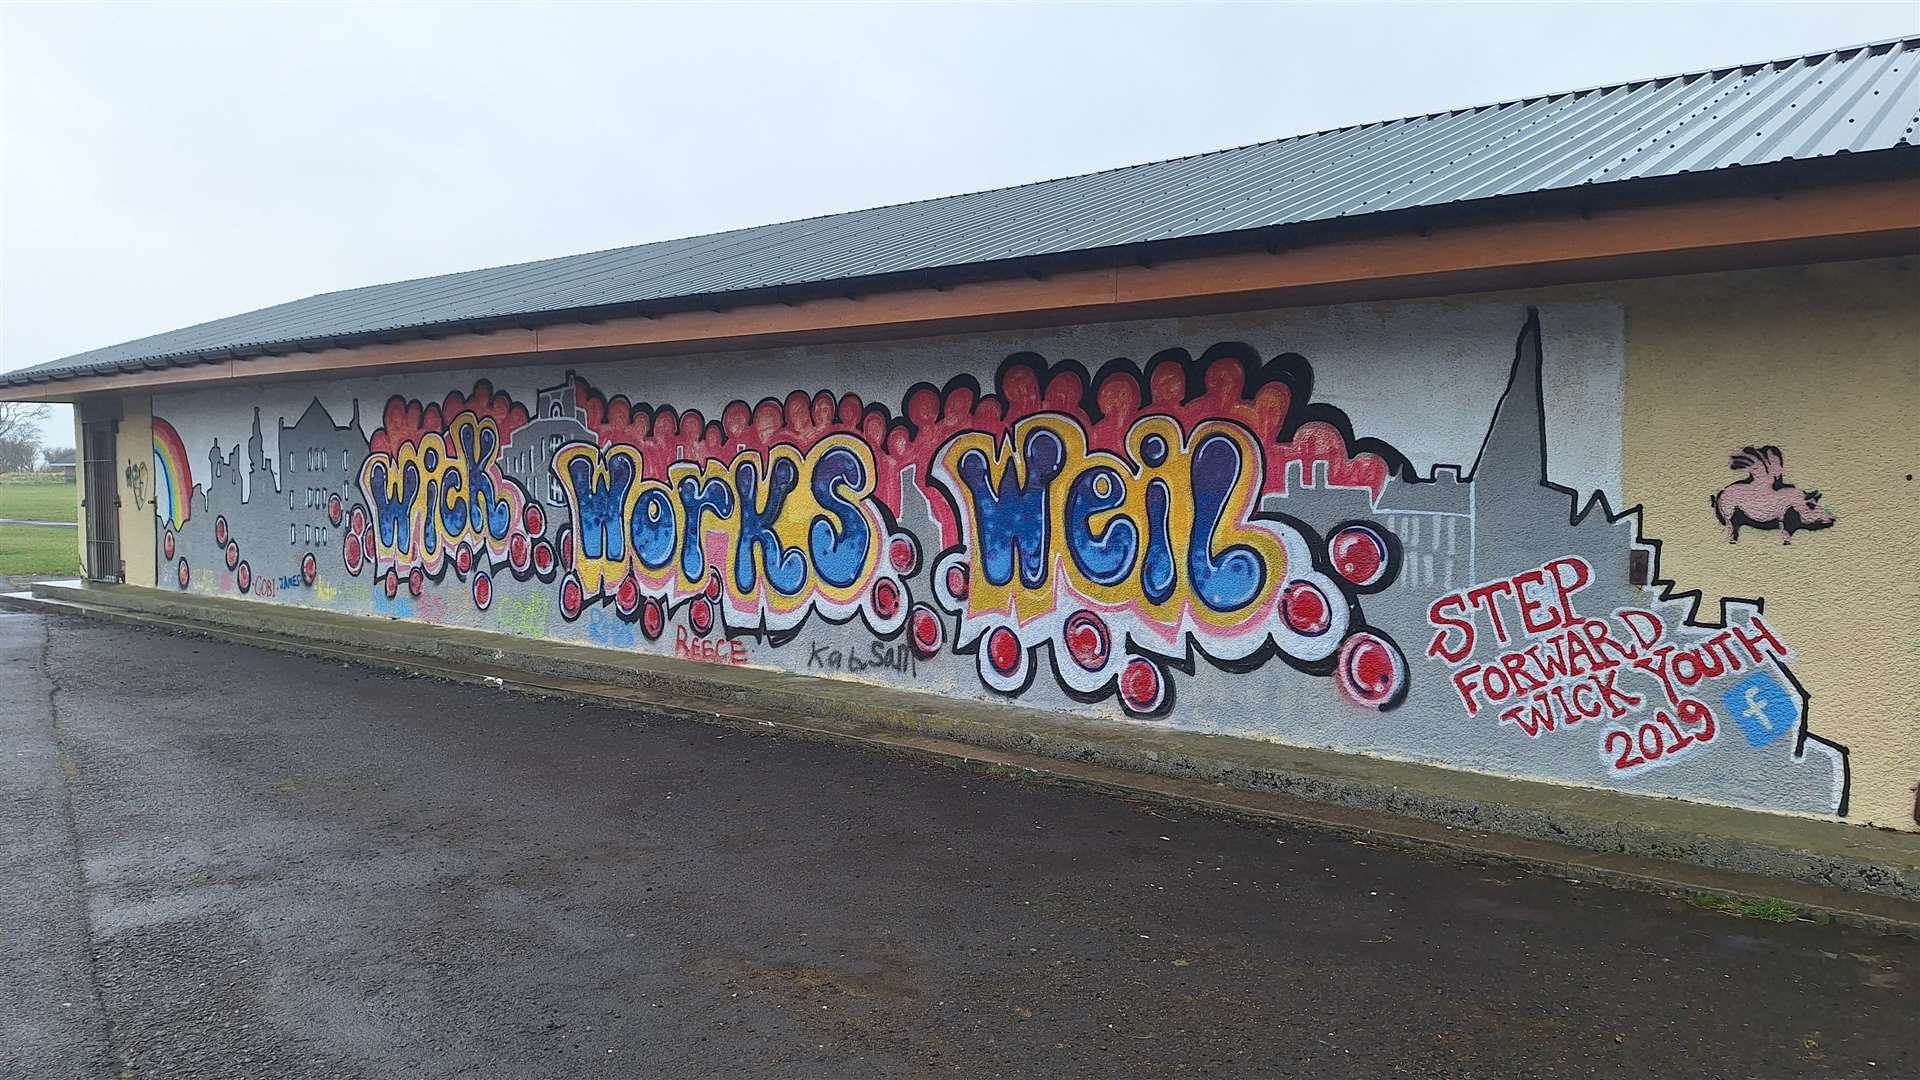 Wick Works Weil graffiti on building in riverside car park.